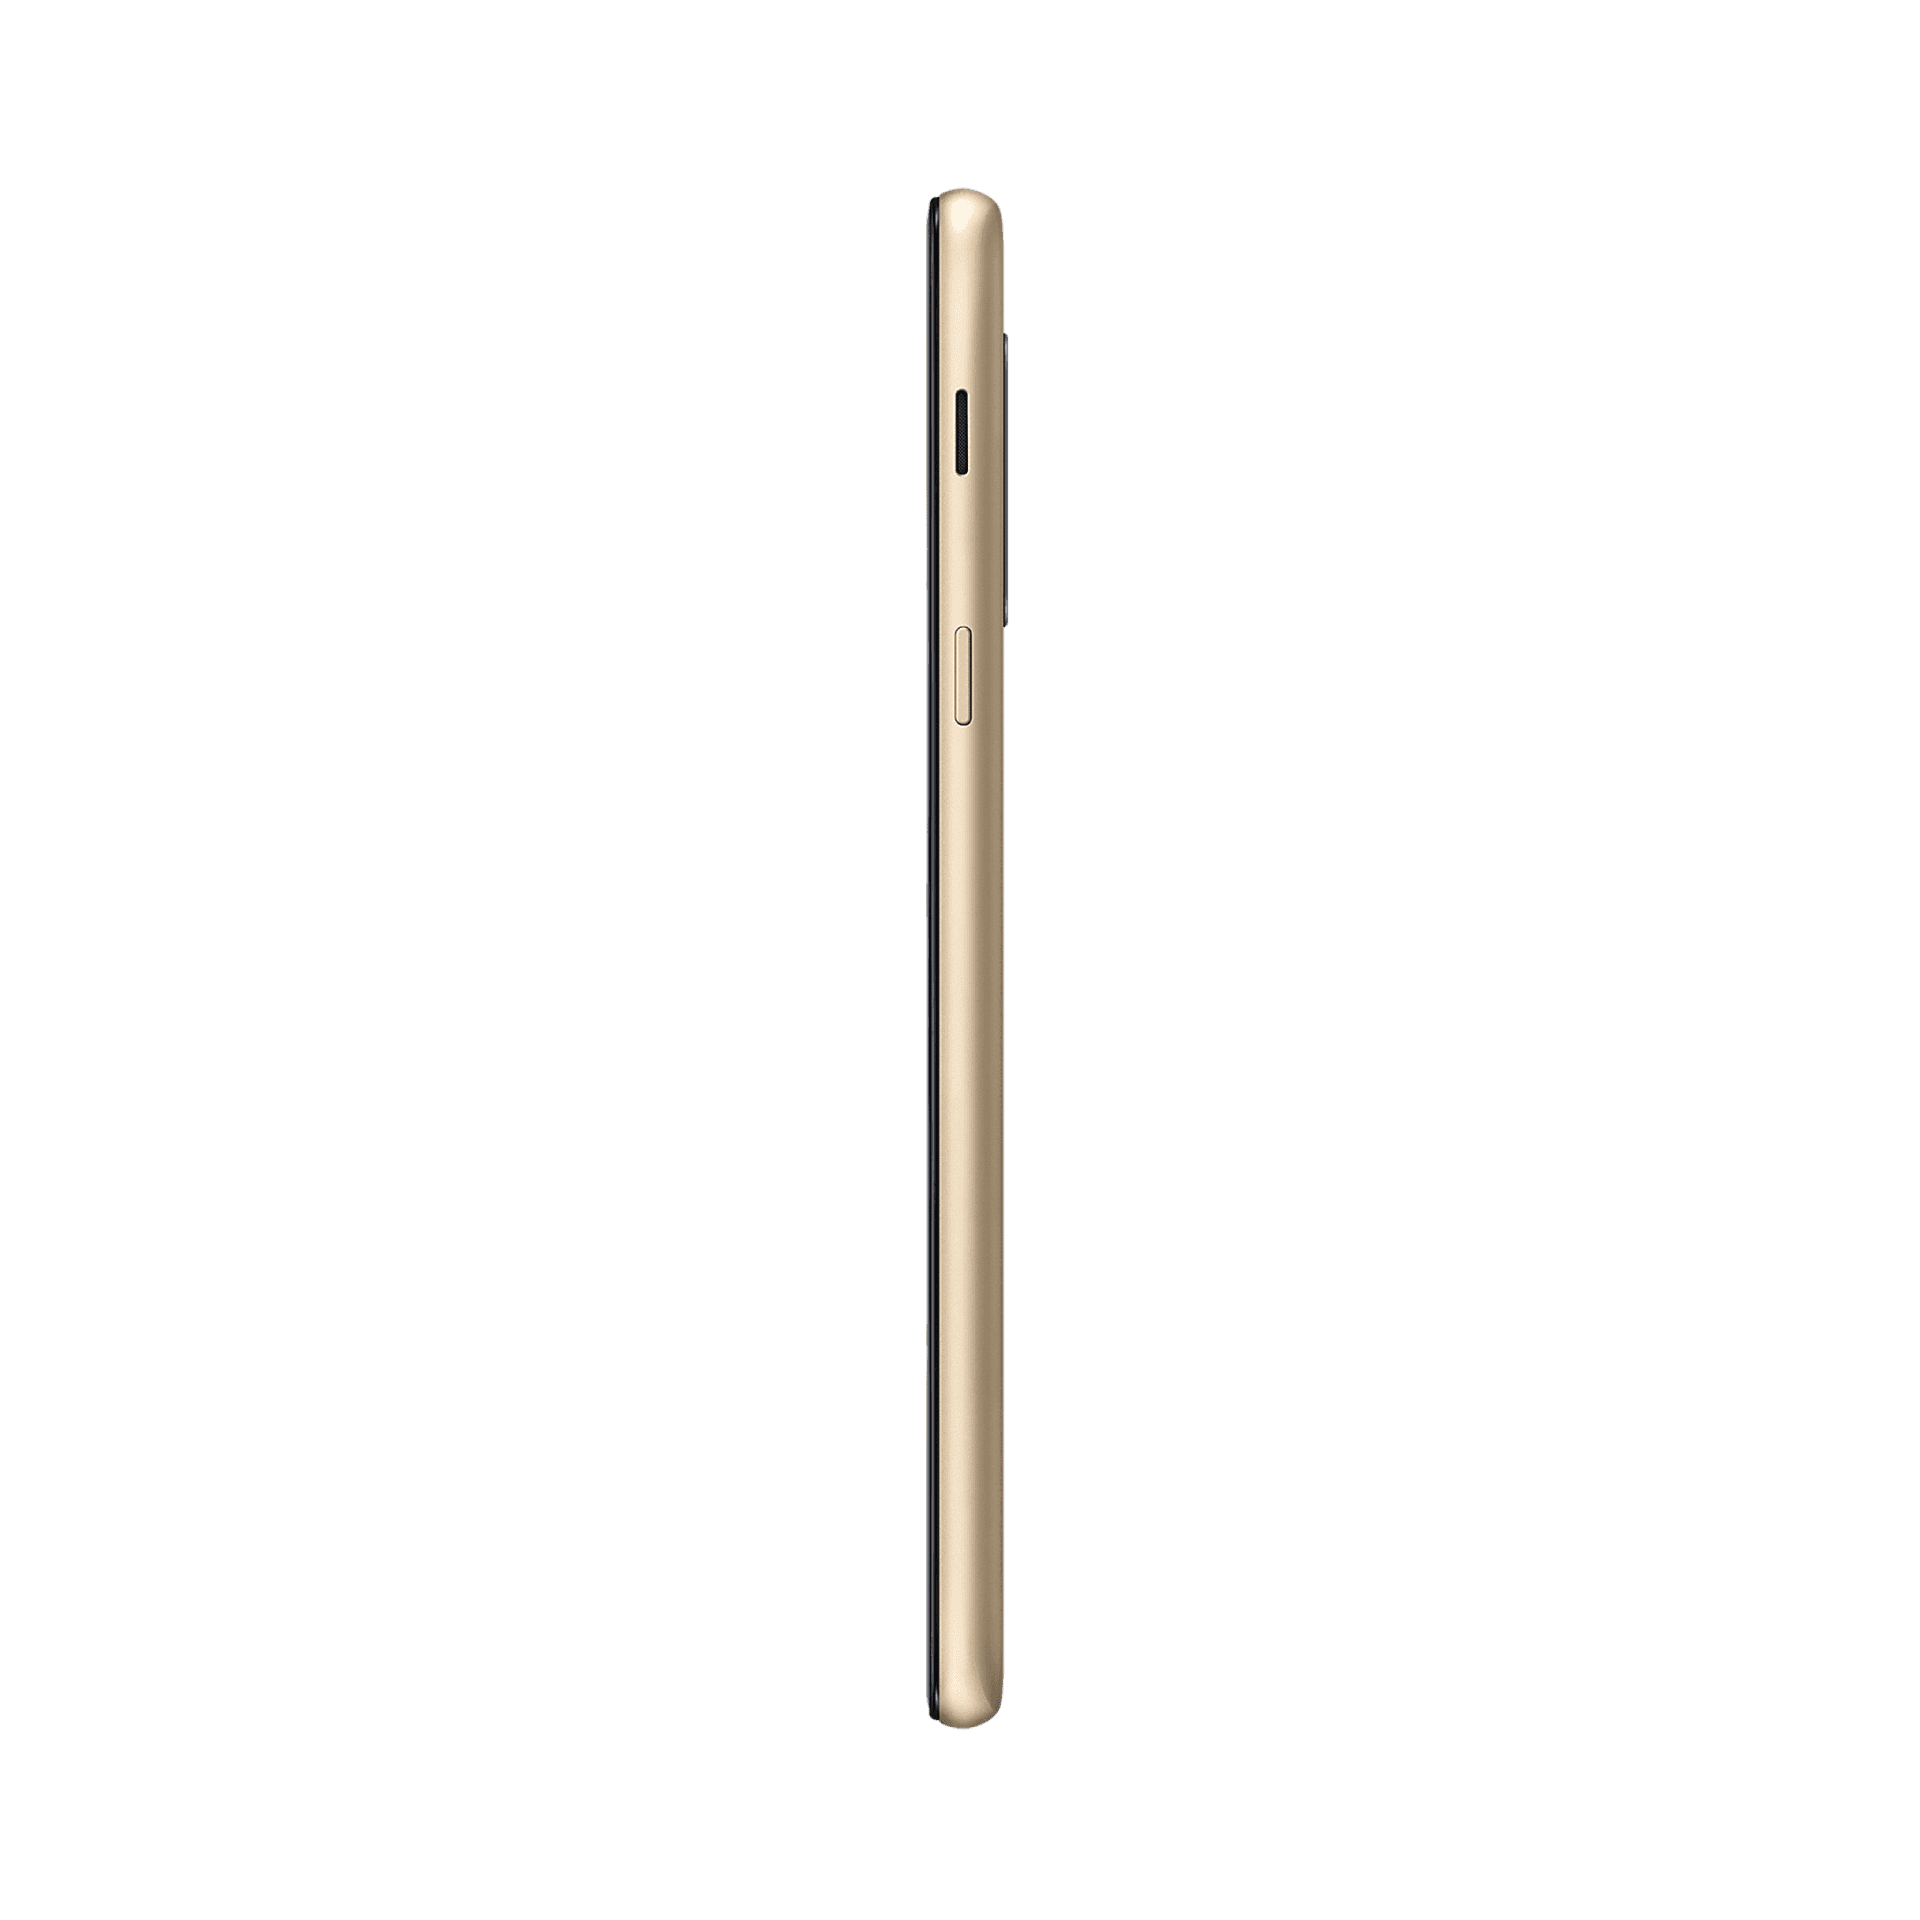 Samsung Galaxy A6 Plus - 32 GB - Altın